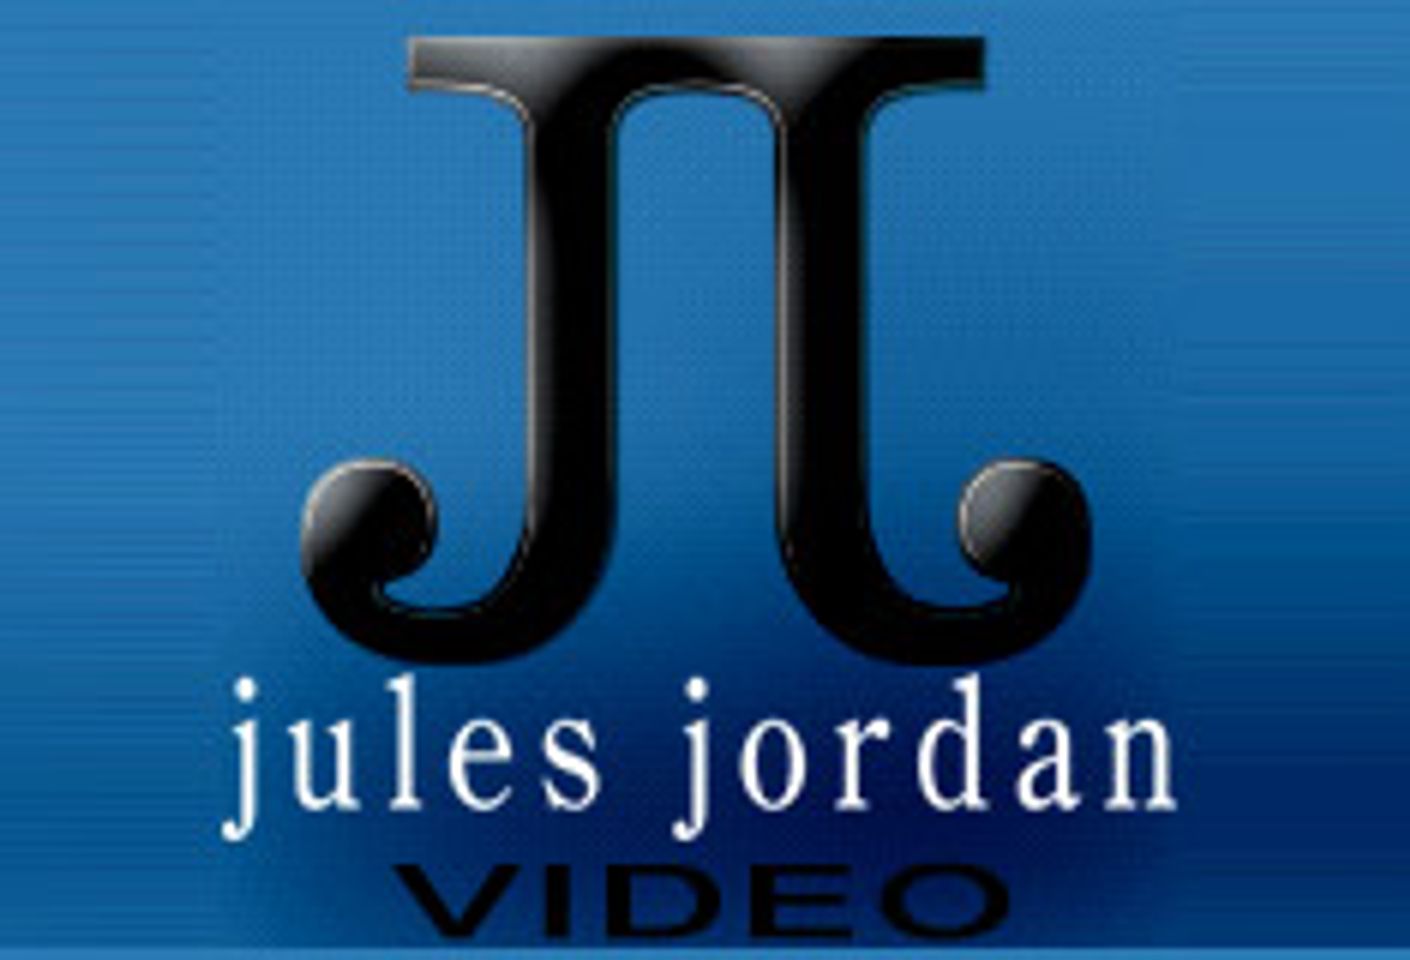 Jules Jordan Video Files Lawsuit Against Two NYC Stores